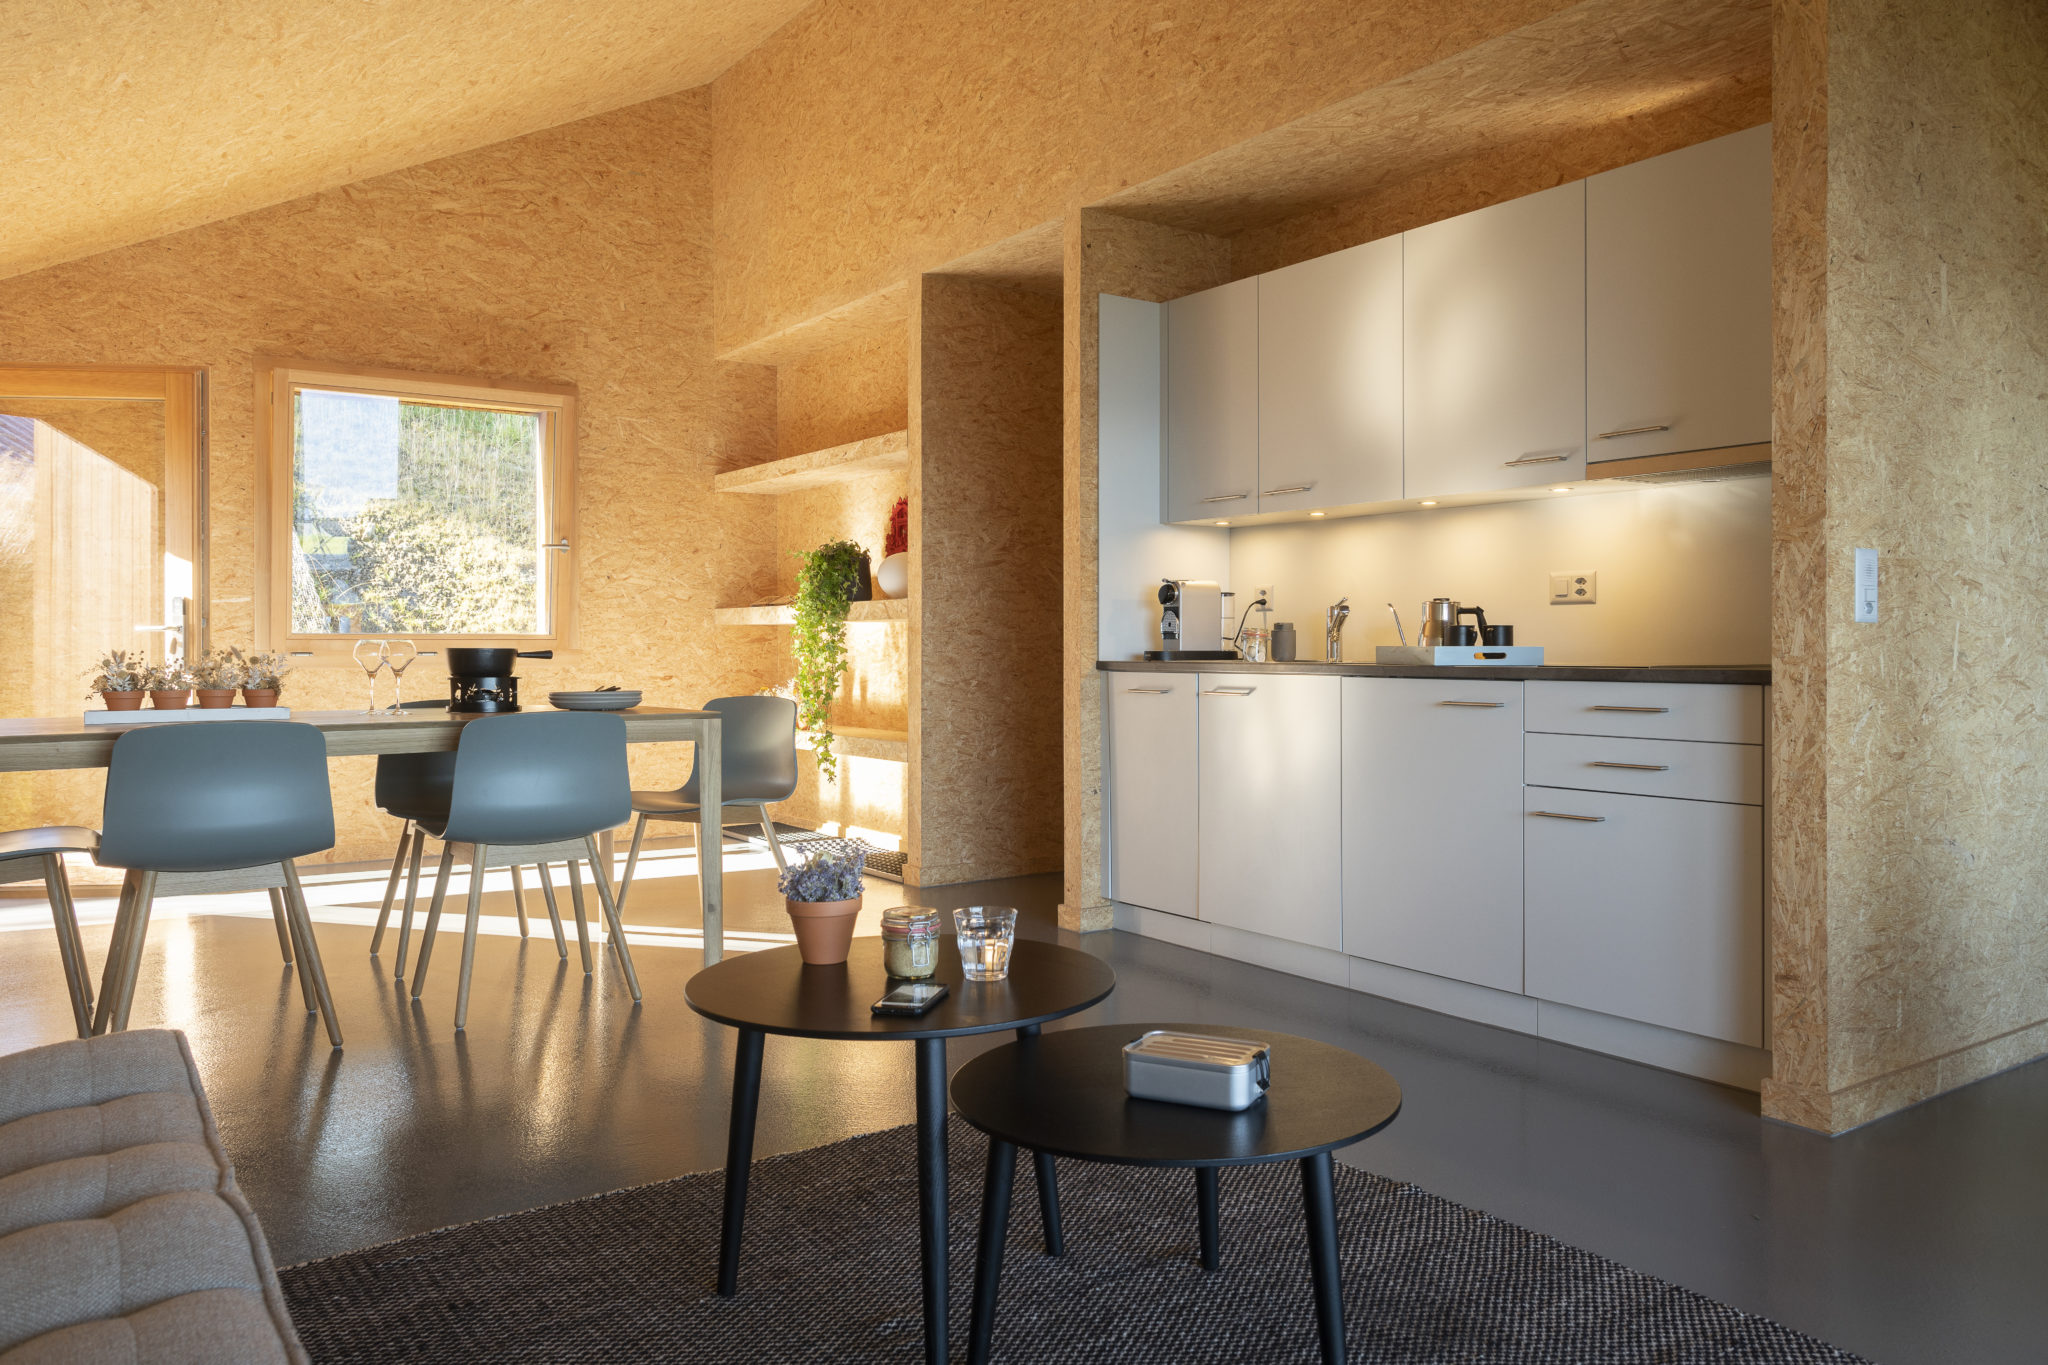 Minimalistic kitchen in holiday accommodation in Switzerland